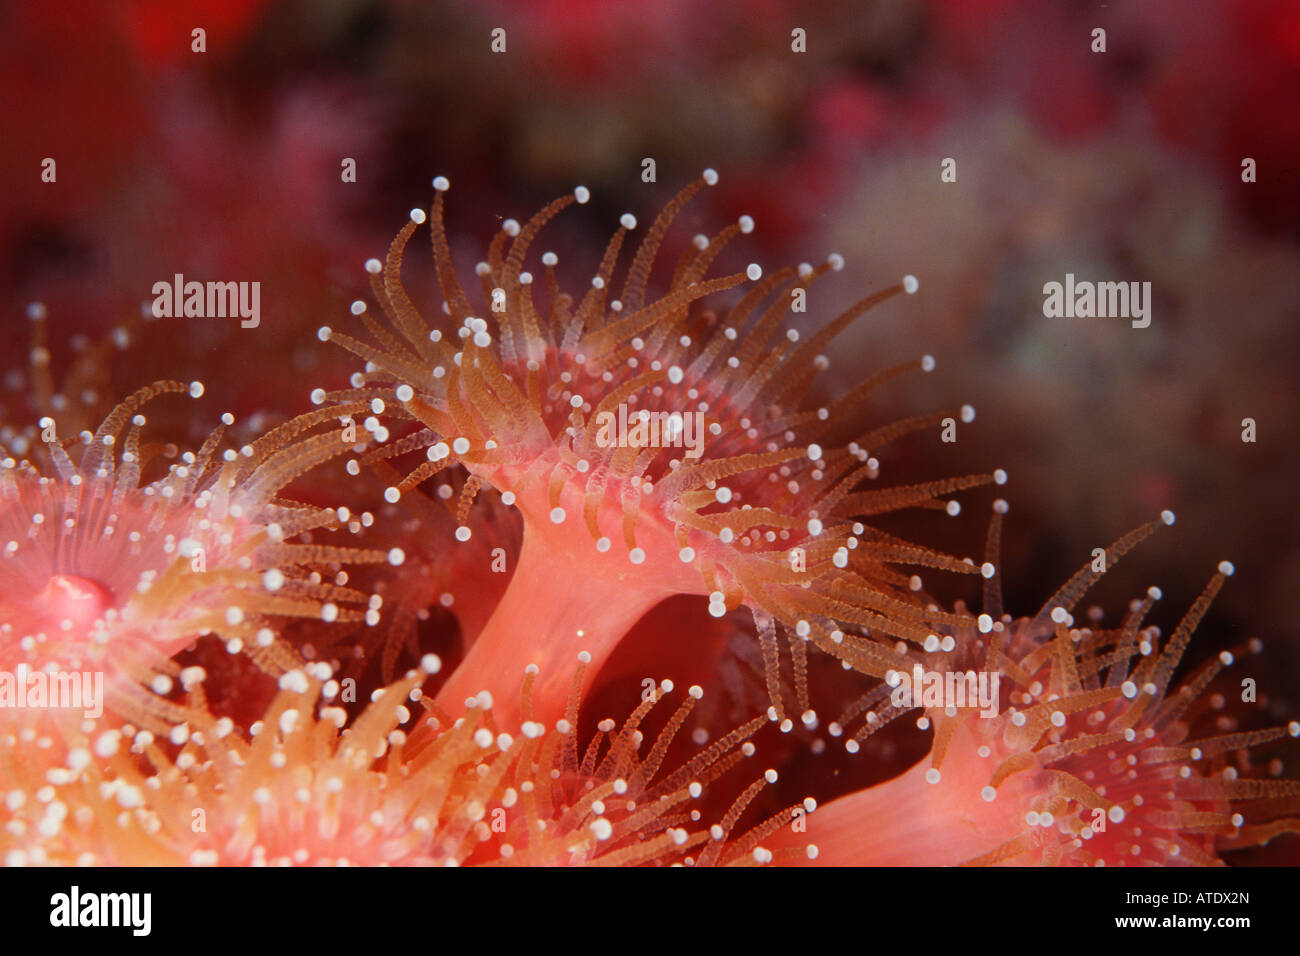 Club tipped anemone Corynactis californica California Eastern Pacific Ocean Stock Photo